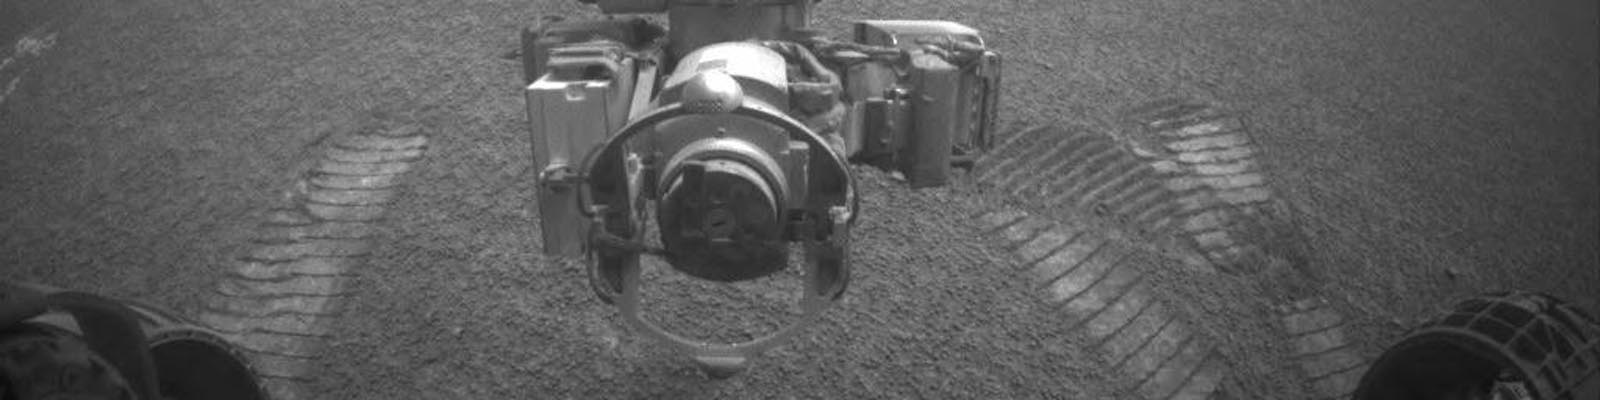 Bras robotique du rover martien Opportunity